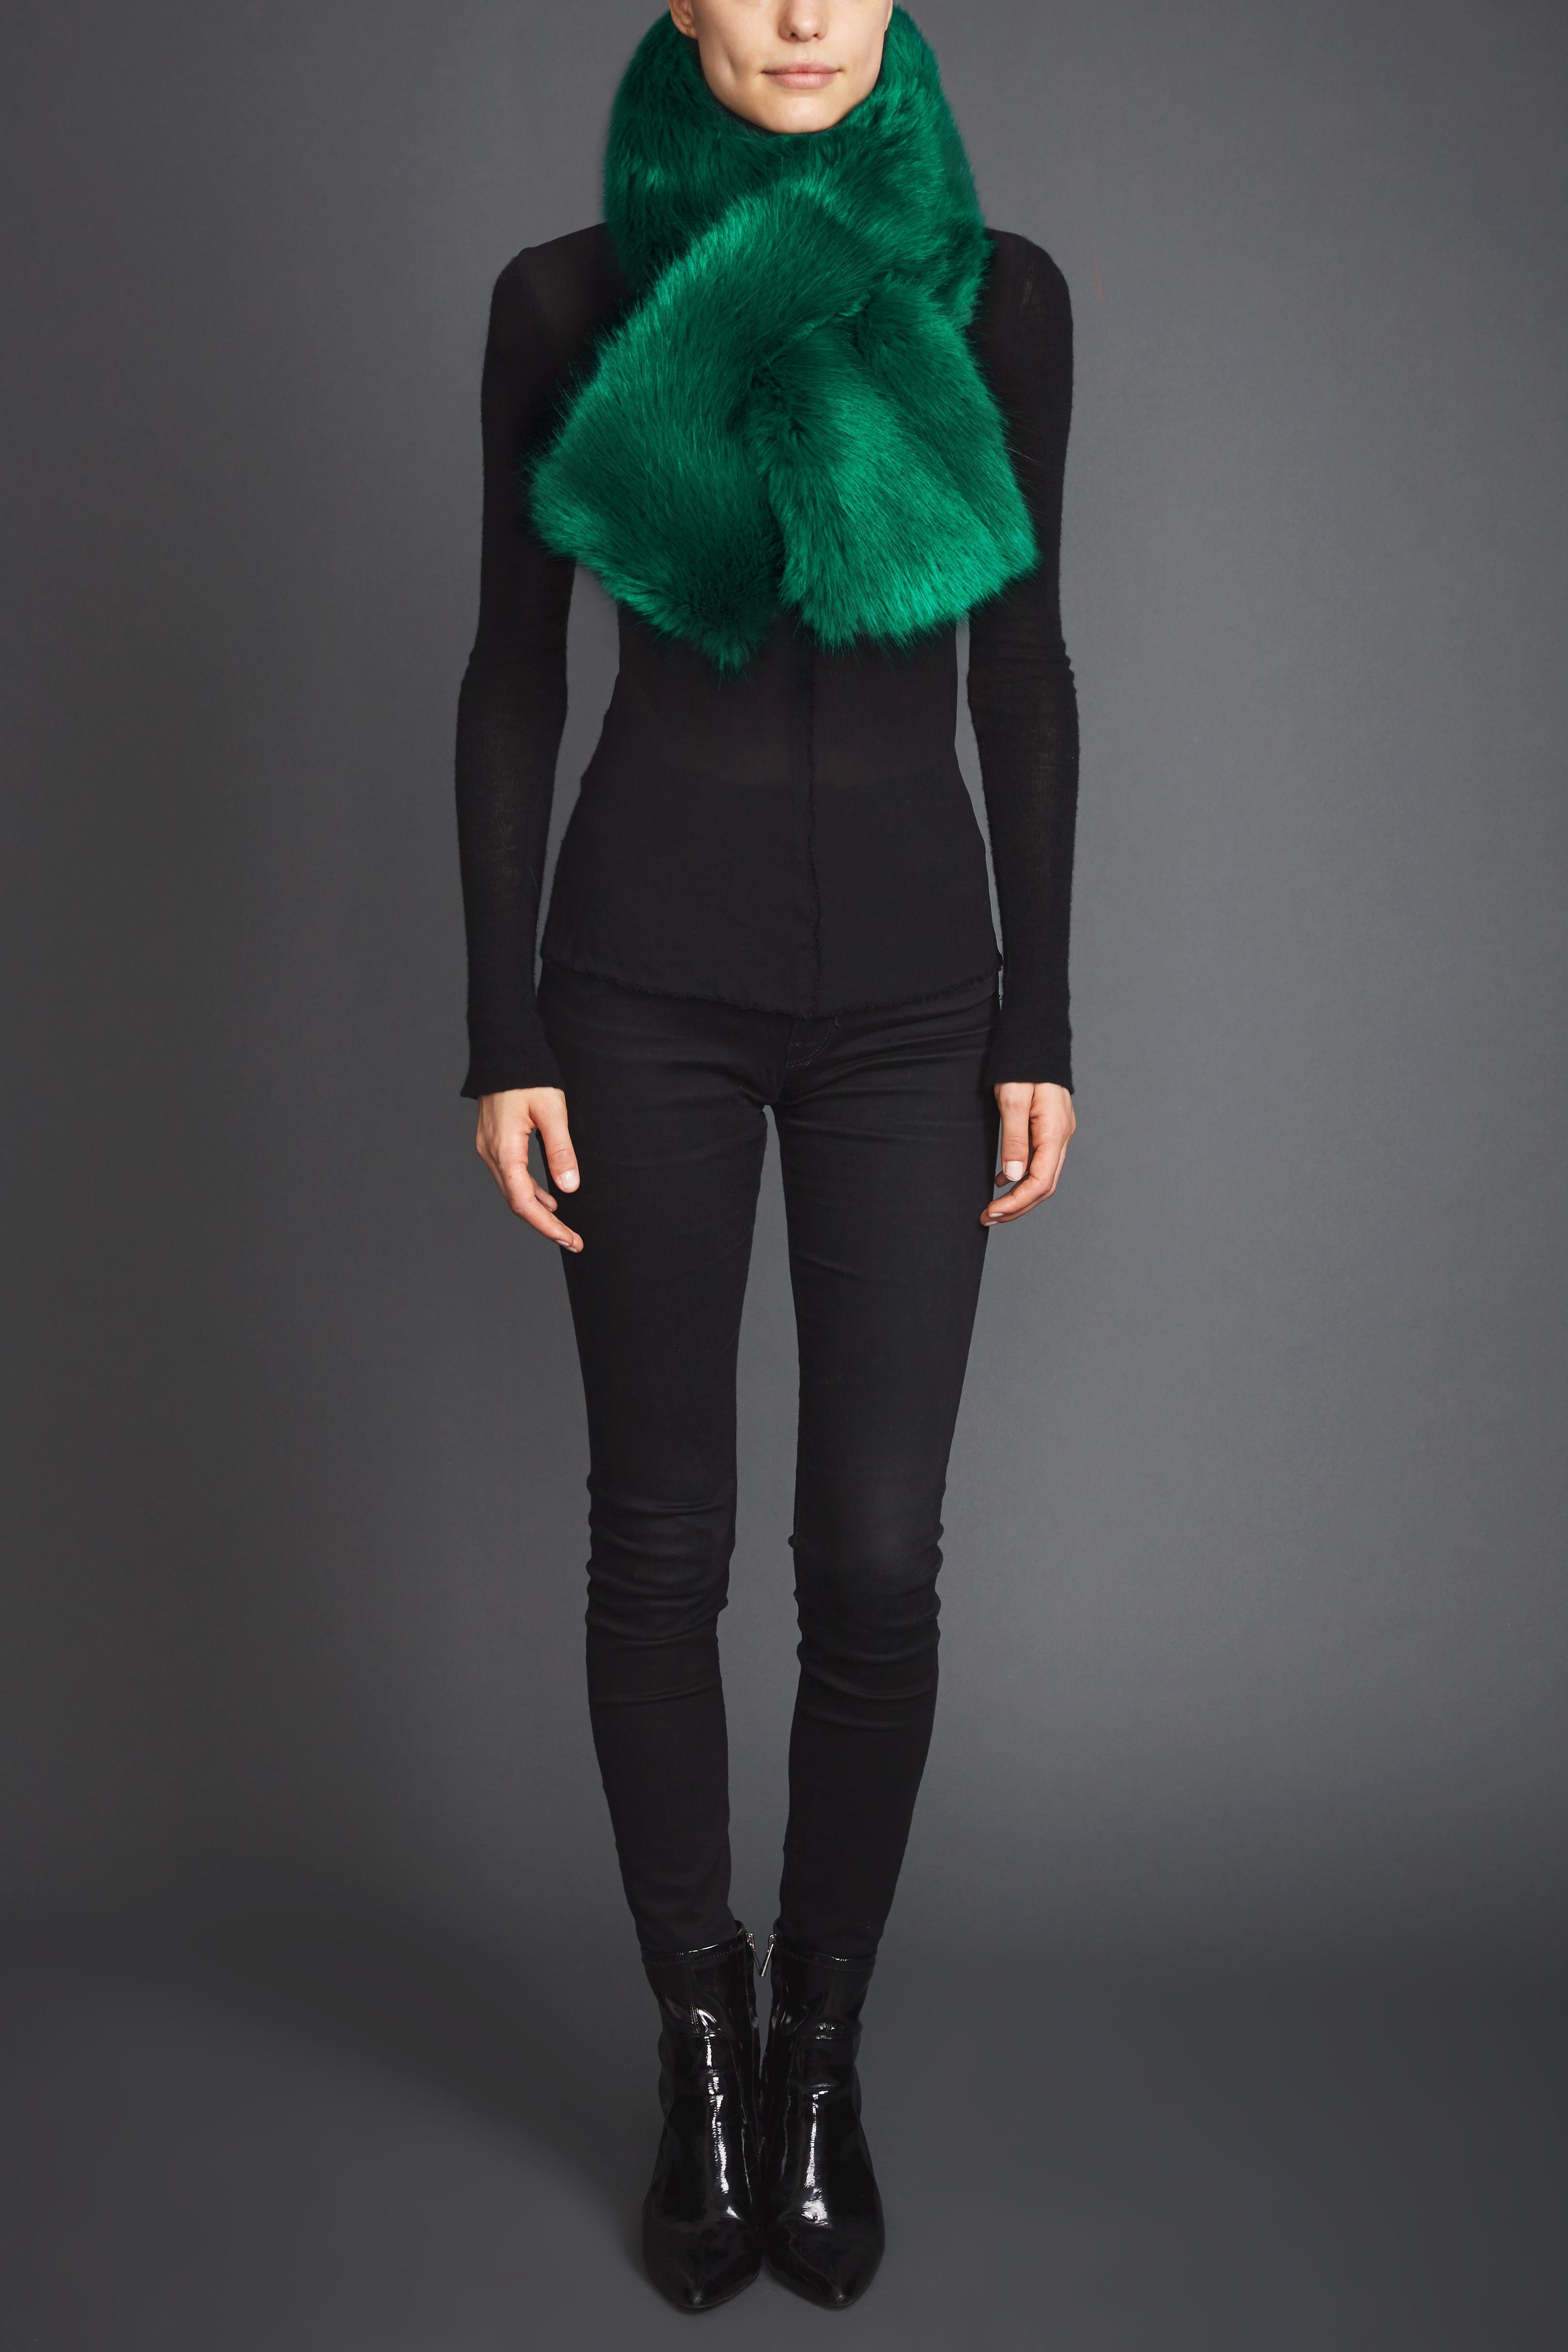 Verheyen London Cross-through Faux Fur Collar in Emerald Green For Sale 1